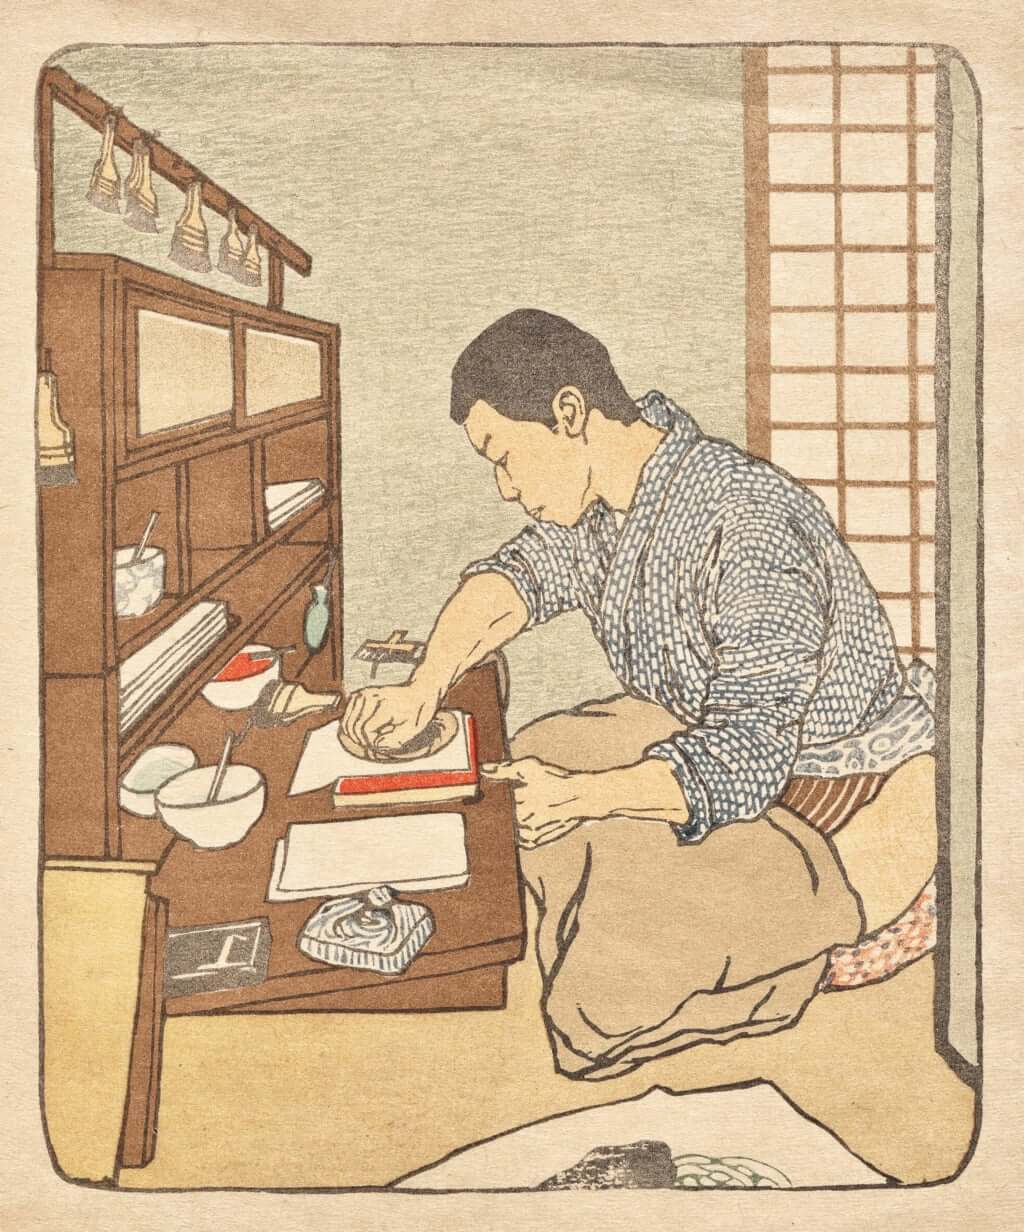 Shin-hanga, Breathing New Life into Prints in the 20th Century